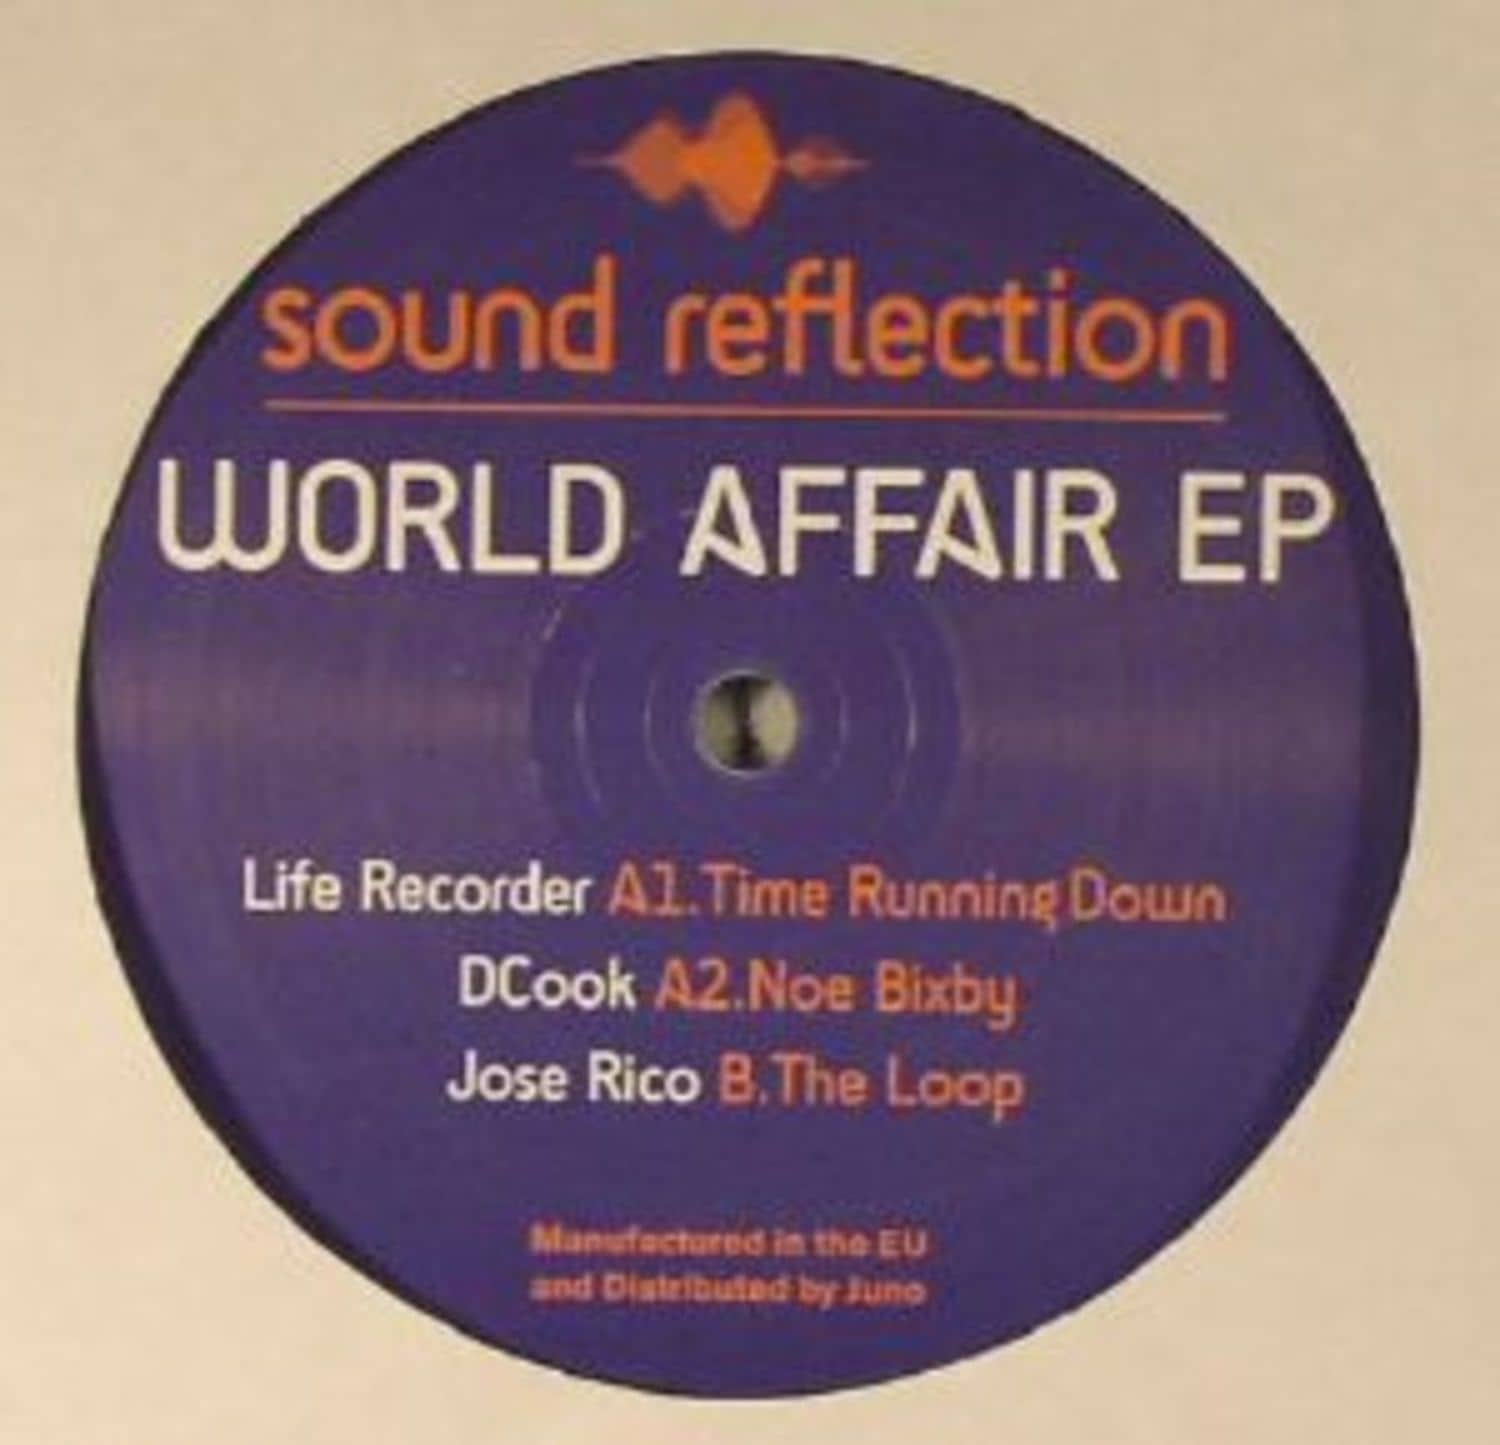 Life Recorder, DCook , Jose Rico - WORLD AFFAIR EP